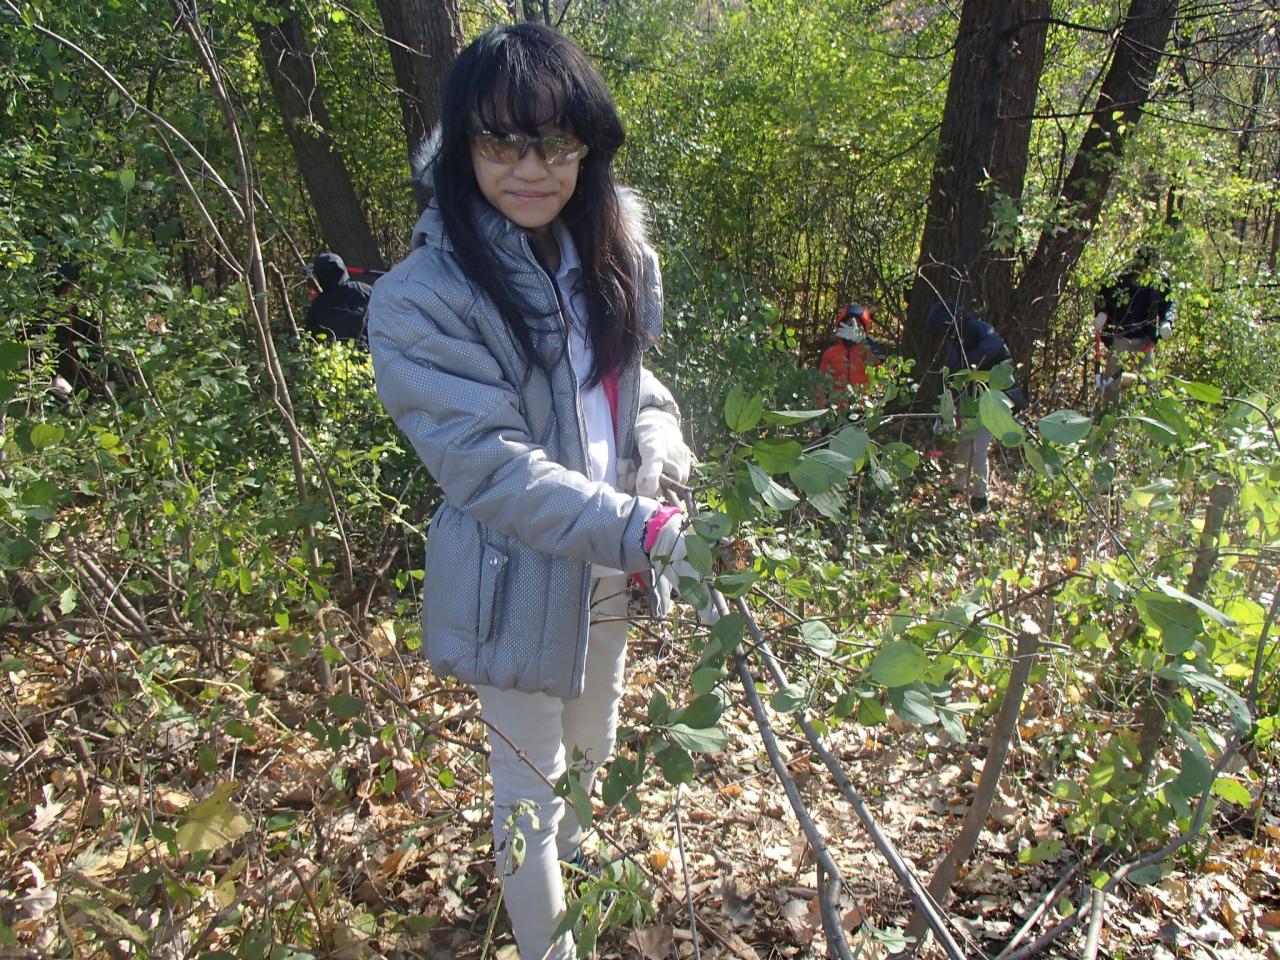 Volunteer removing buckthorn shrubs